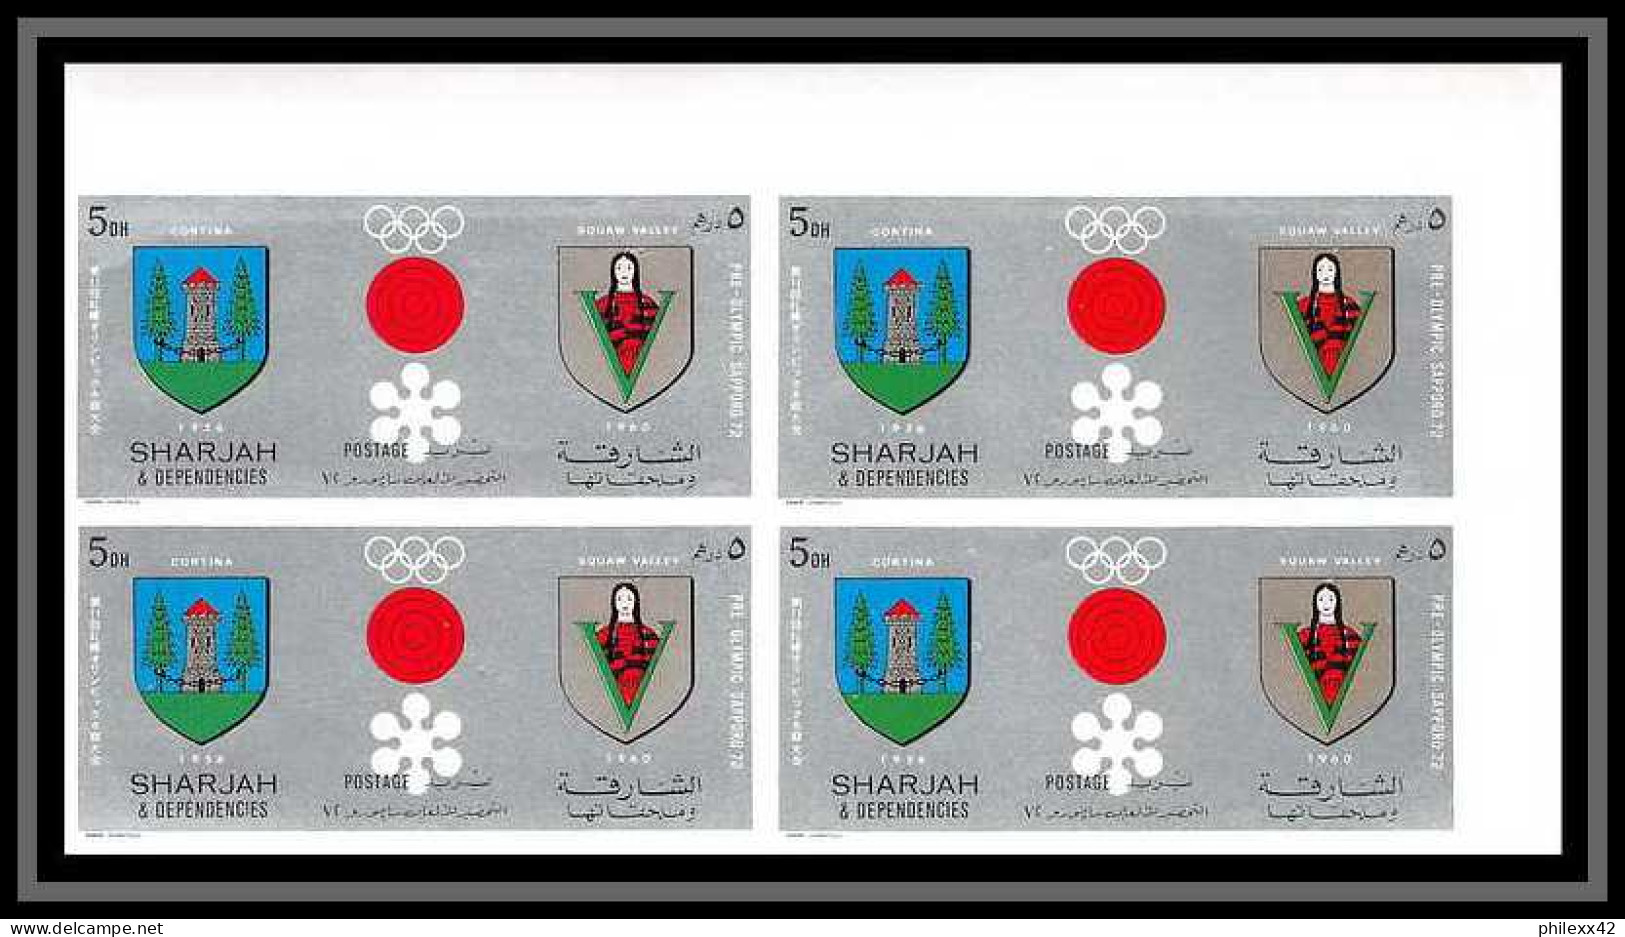 100b Sharjah MNH ** N° 825 / 834 B non dentelé (Imperf) jeux olympiques (winter olympic games) Sapporo 72 bloc 4